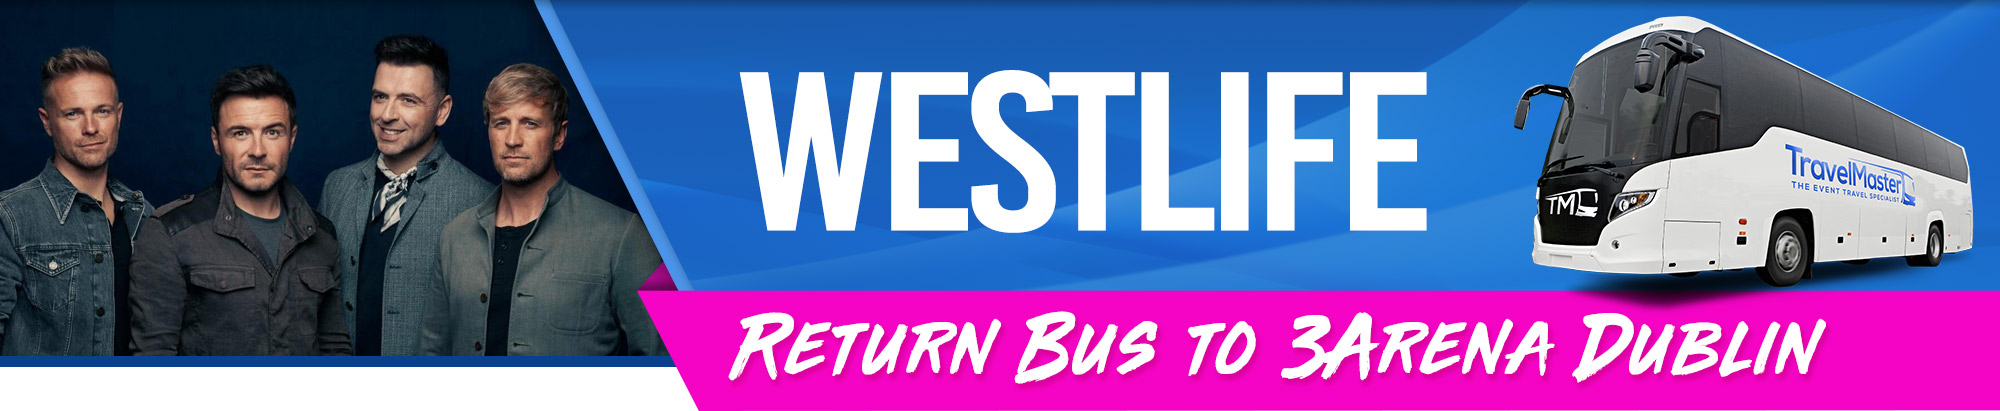 Bus to Westlife 3Arena Dublin December 2022